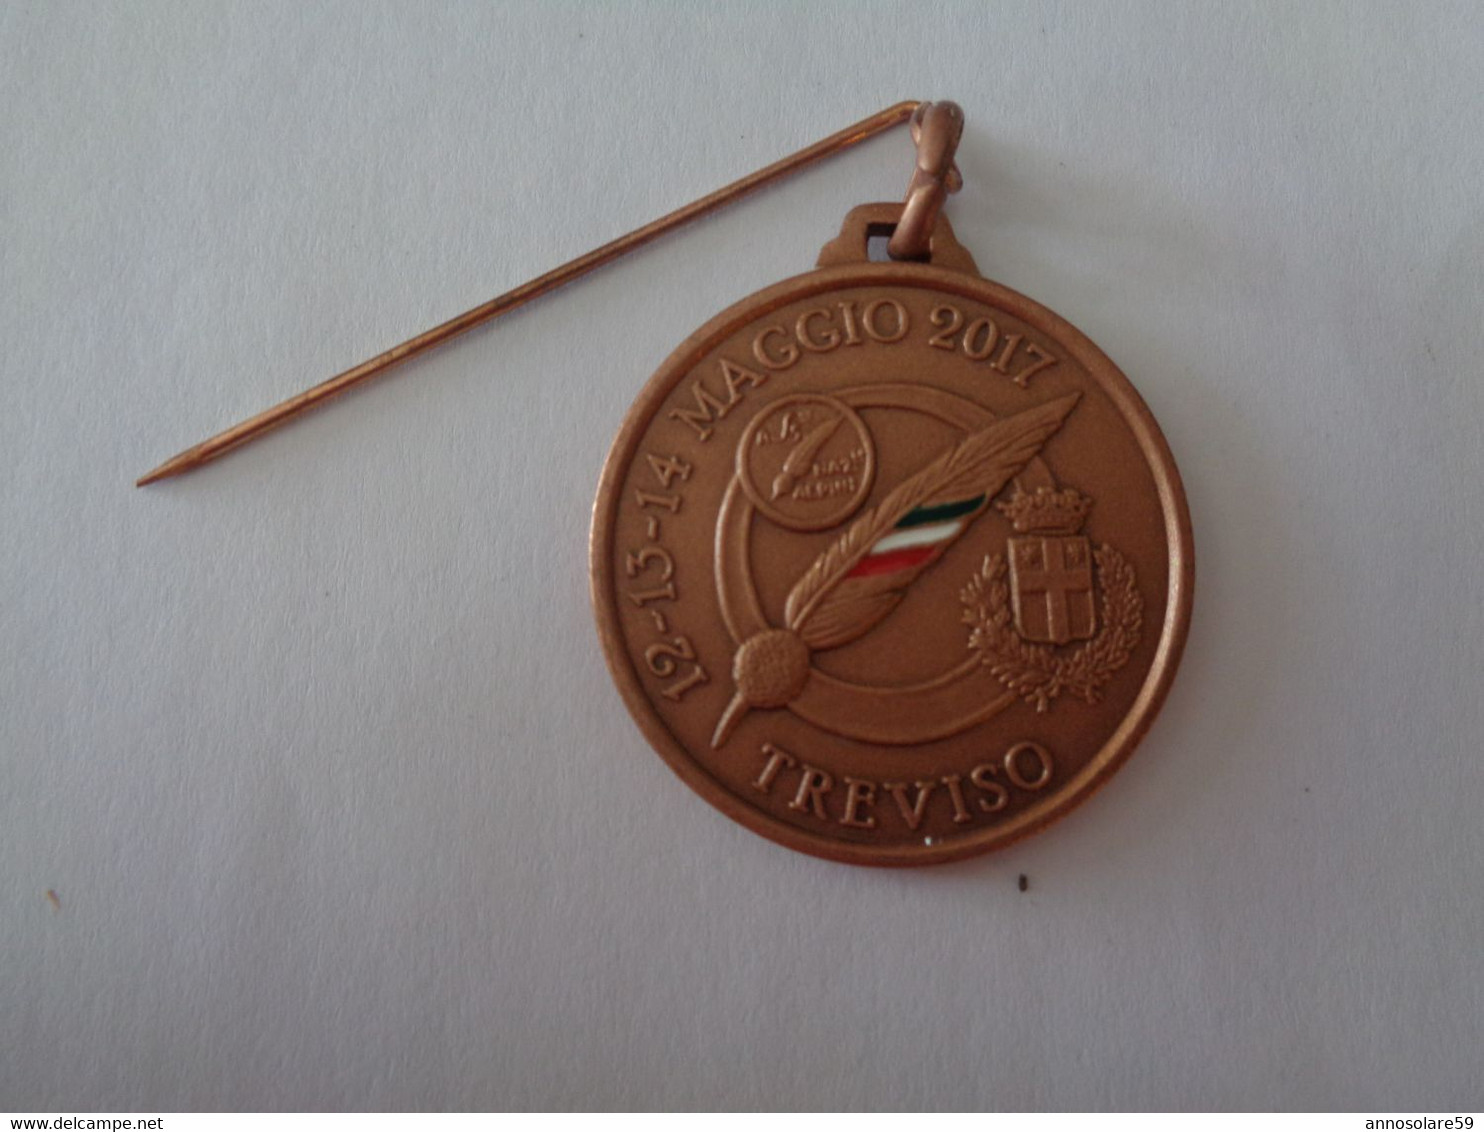 Medal, Medaglia Adunata Treviso 2017 - A.N.A. Associazione Nazionale Alpini  - LEGGI - Italy